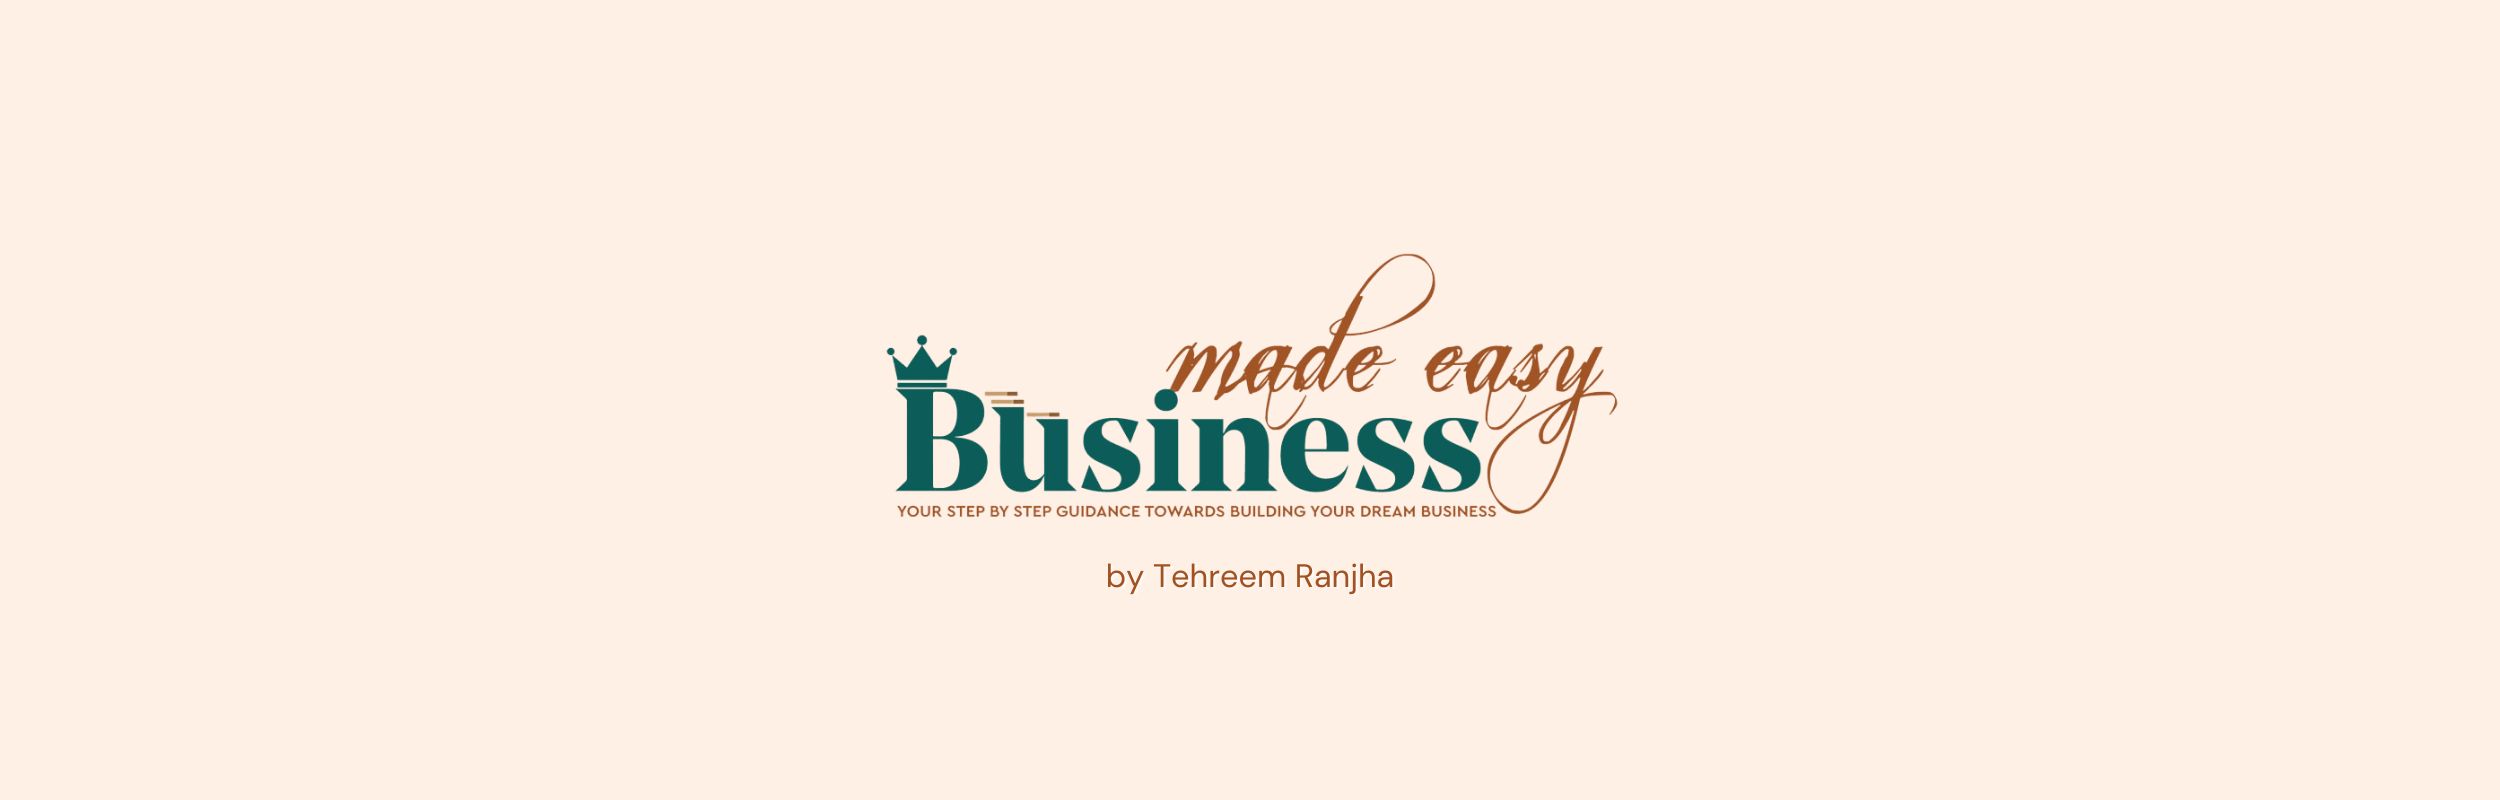 Business Made Easy-Batch 5